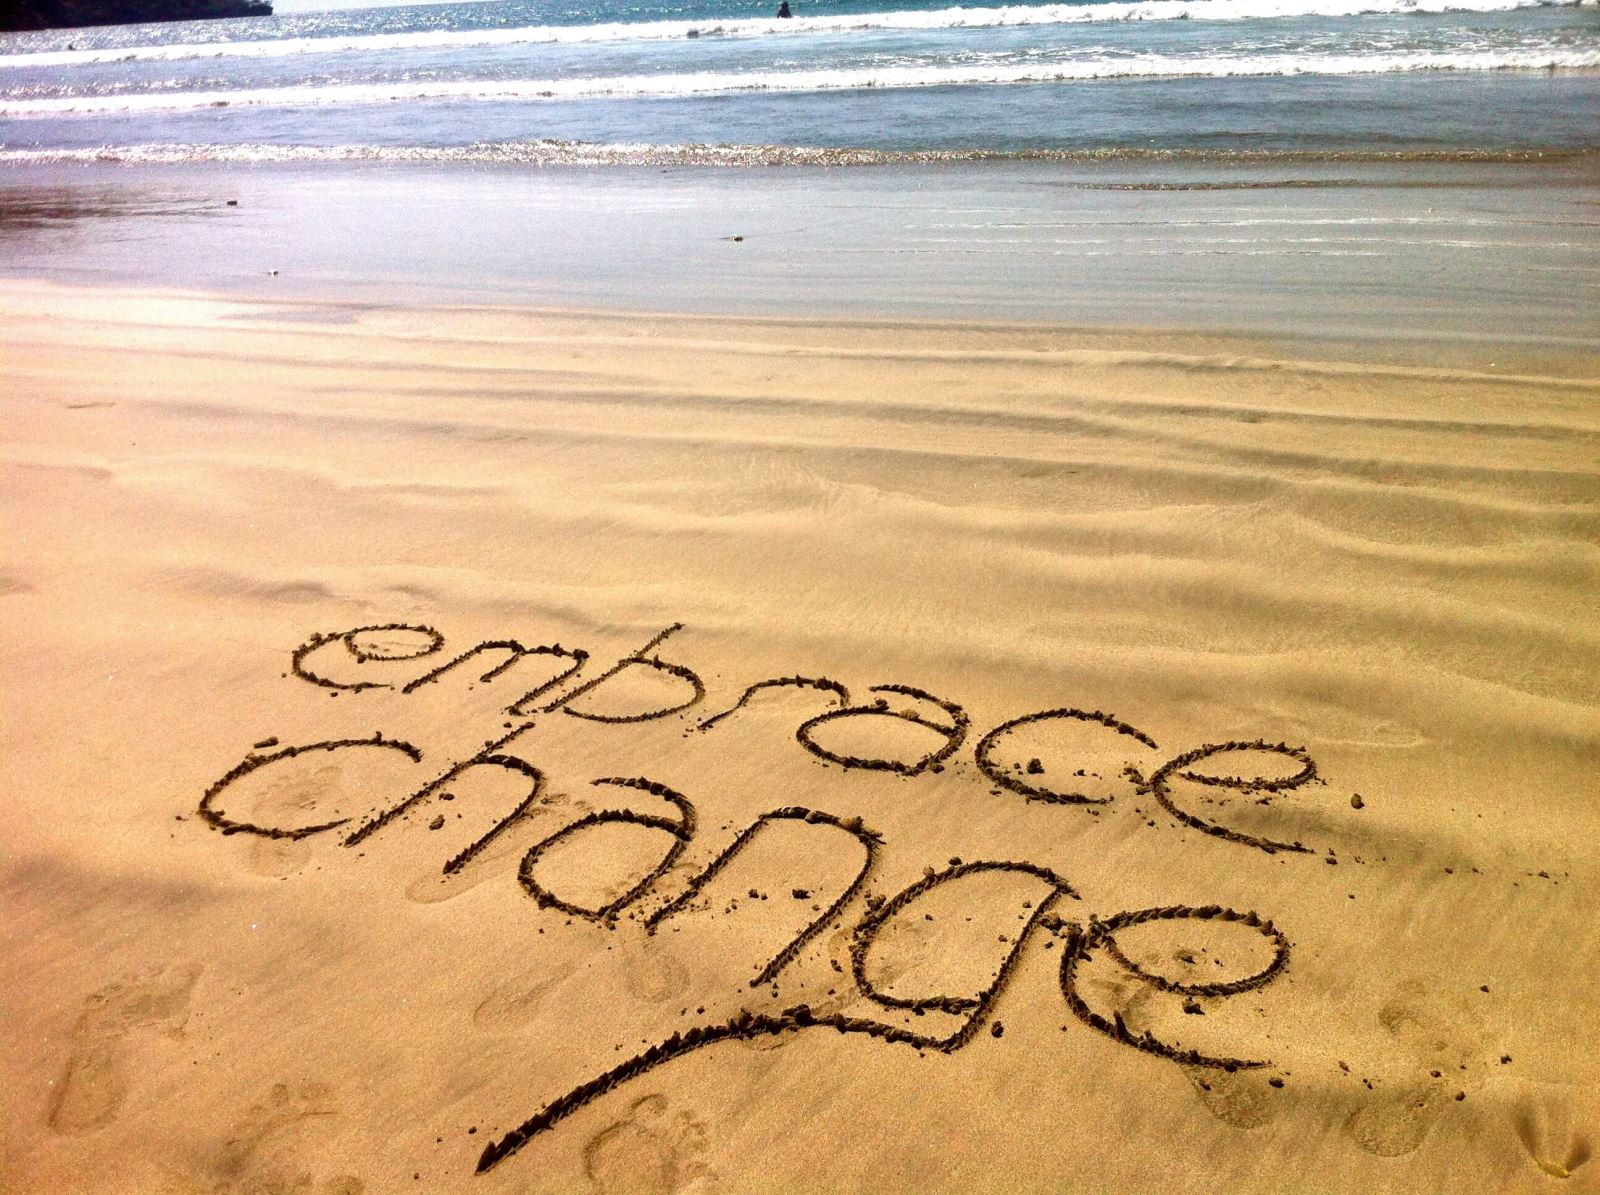 You embrace change